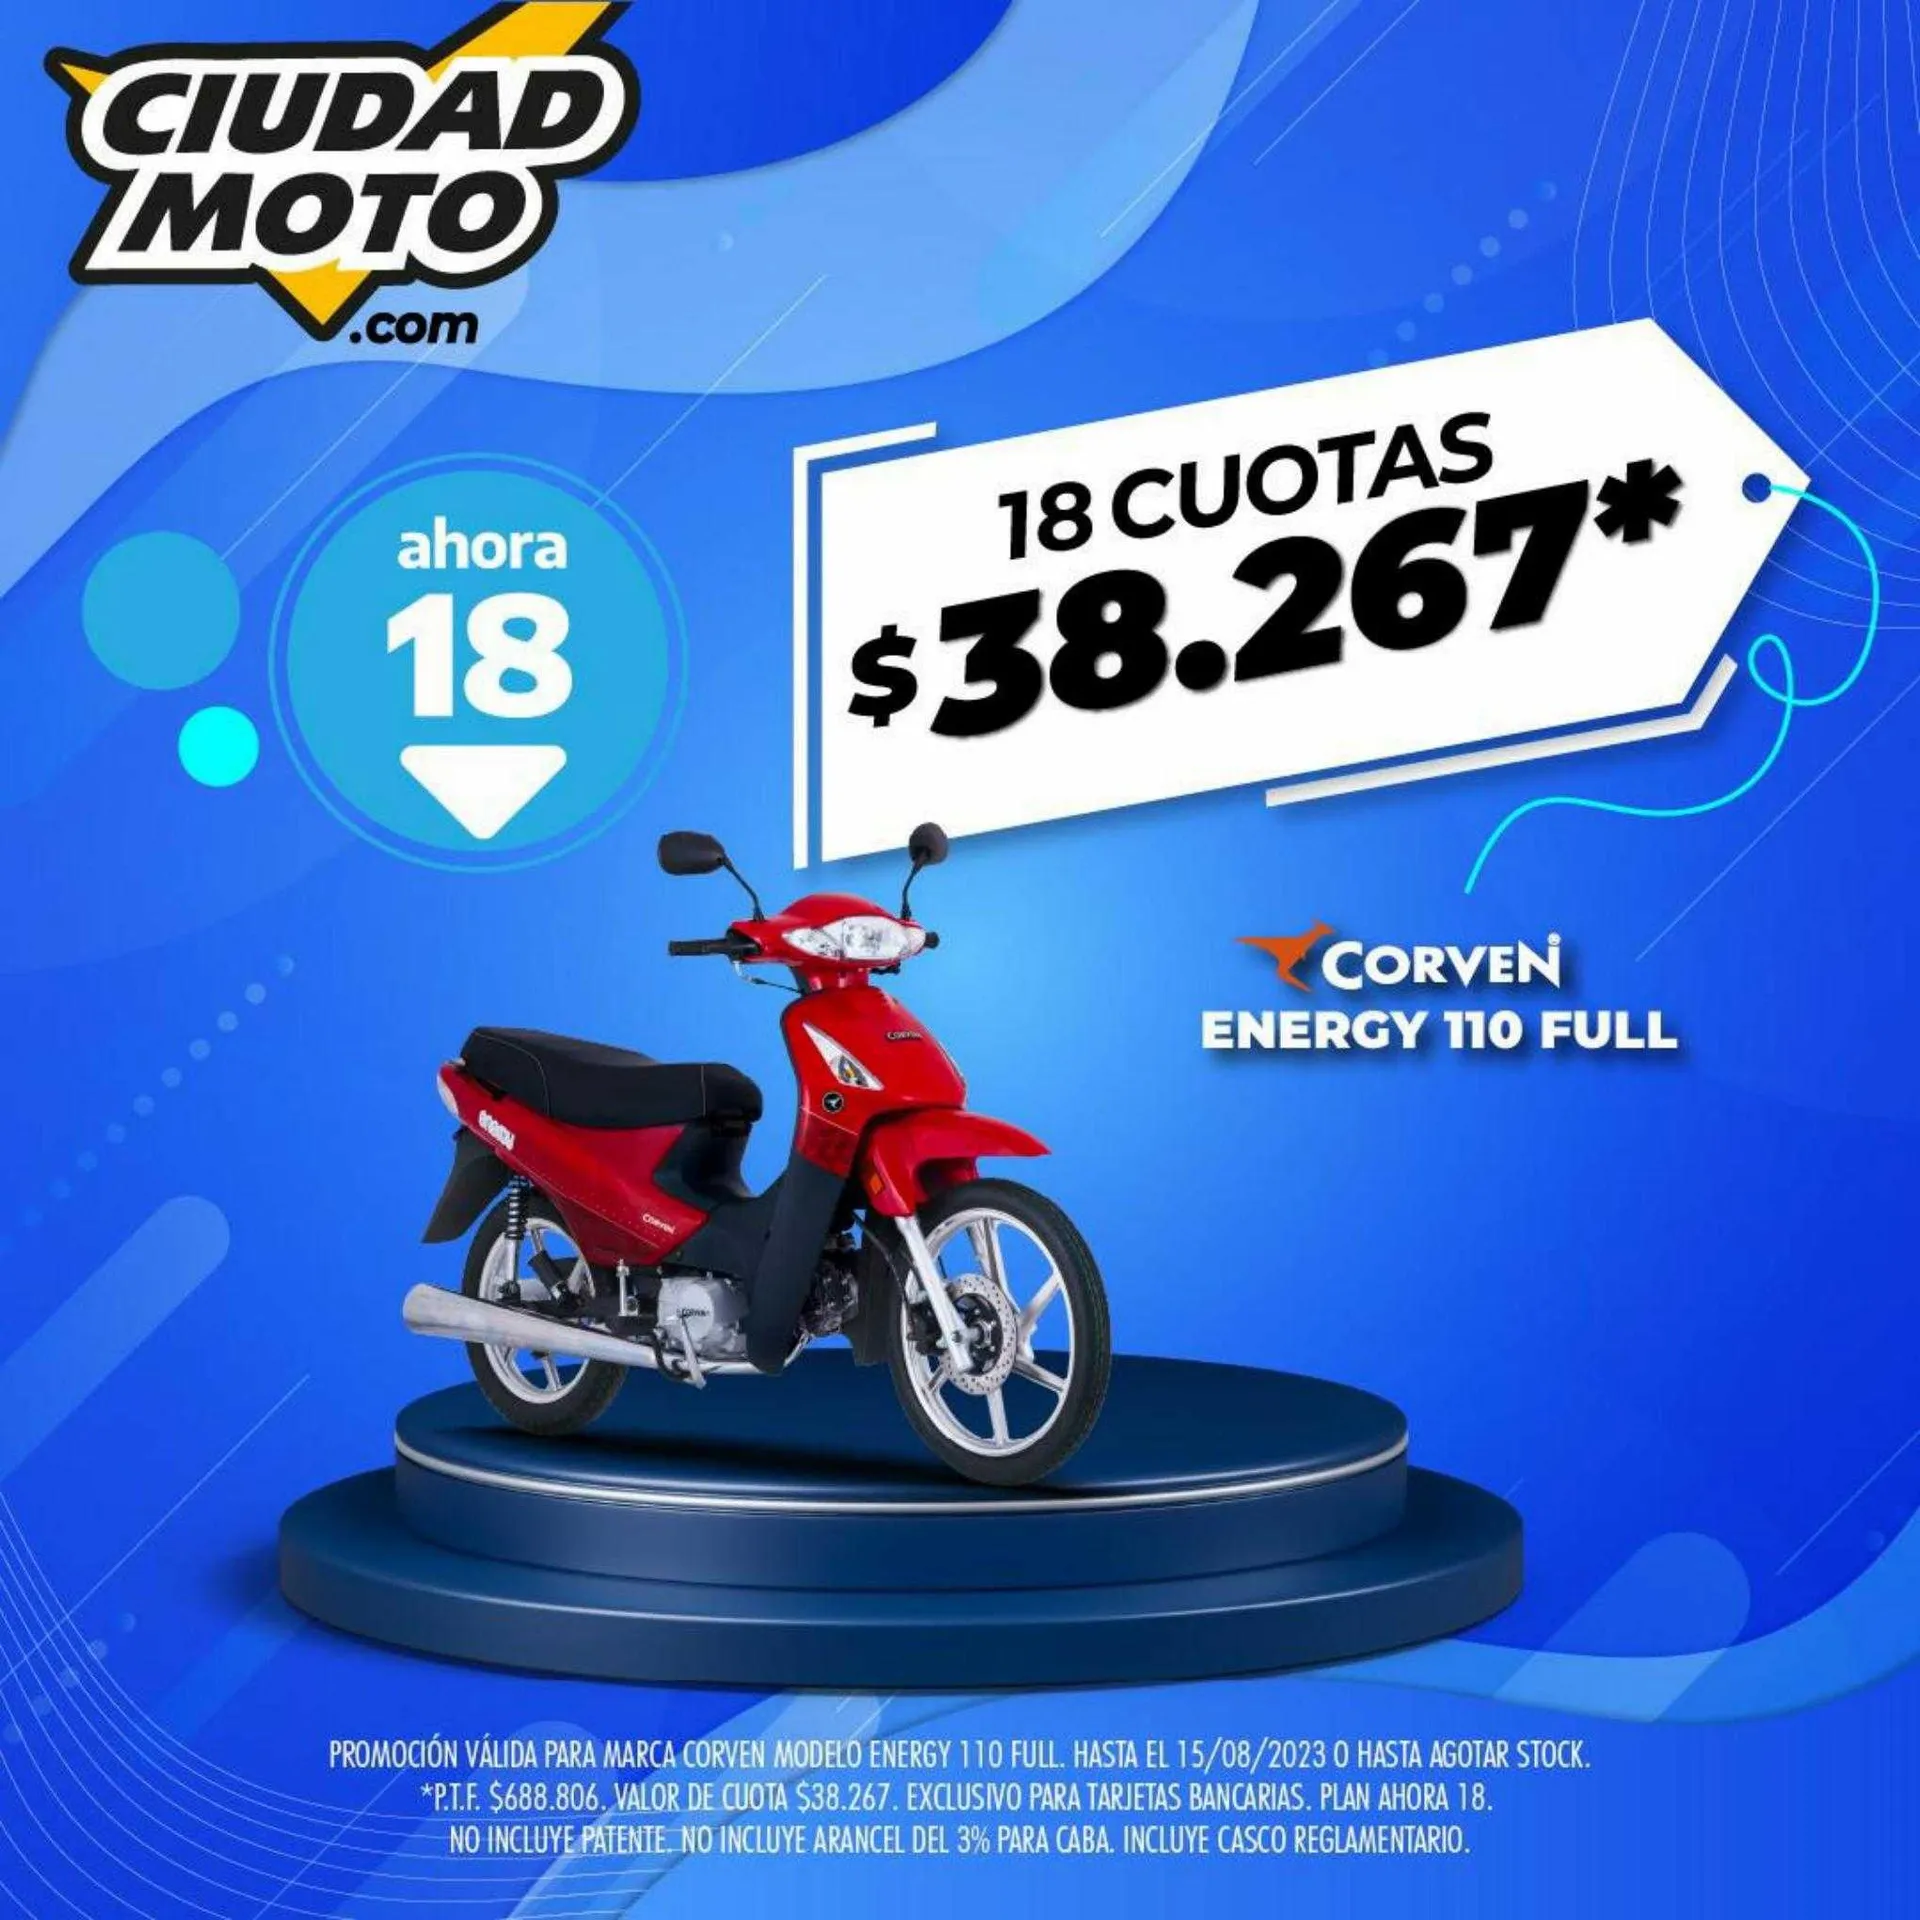 Catálogo Ciudad Moto - 2